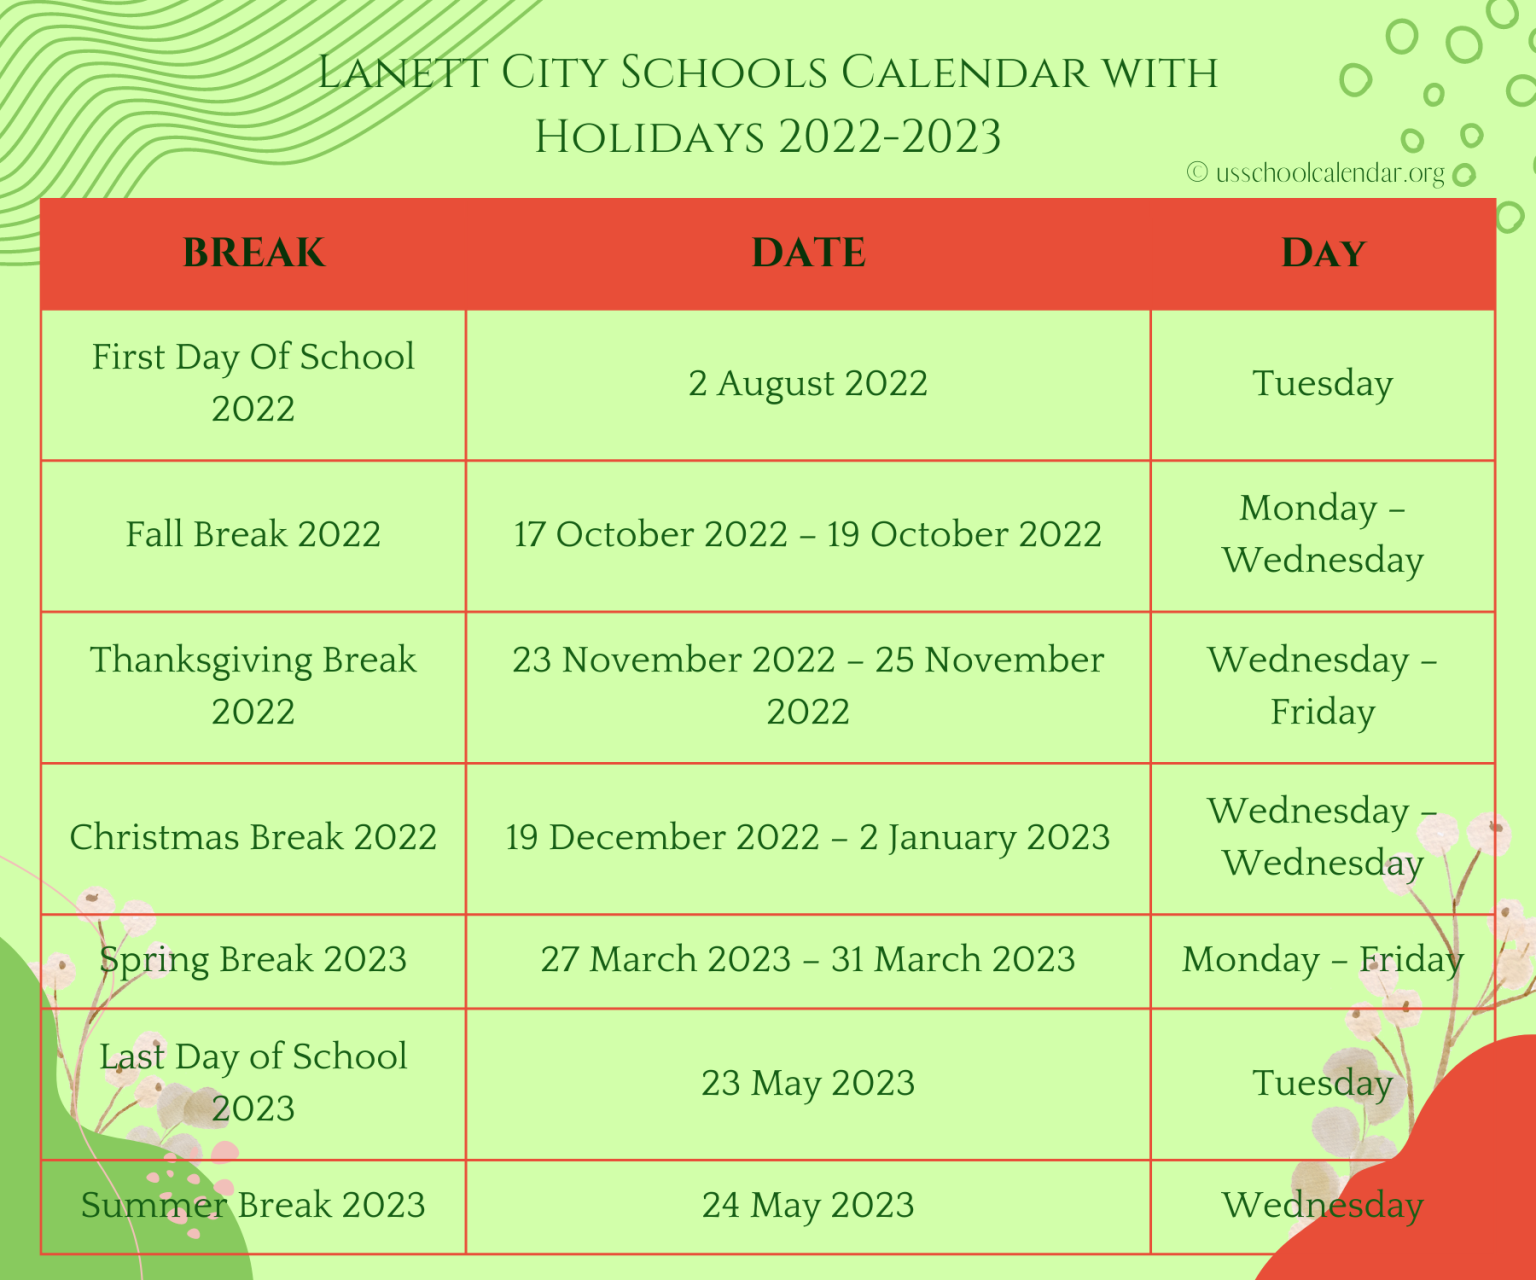 lanett-city-schools-calendar-with-holidays-2022-2023